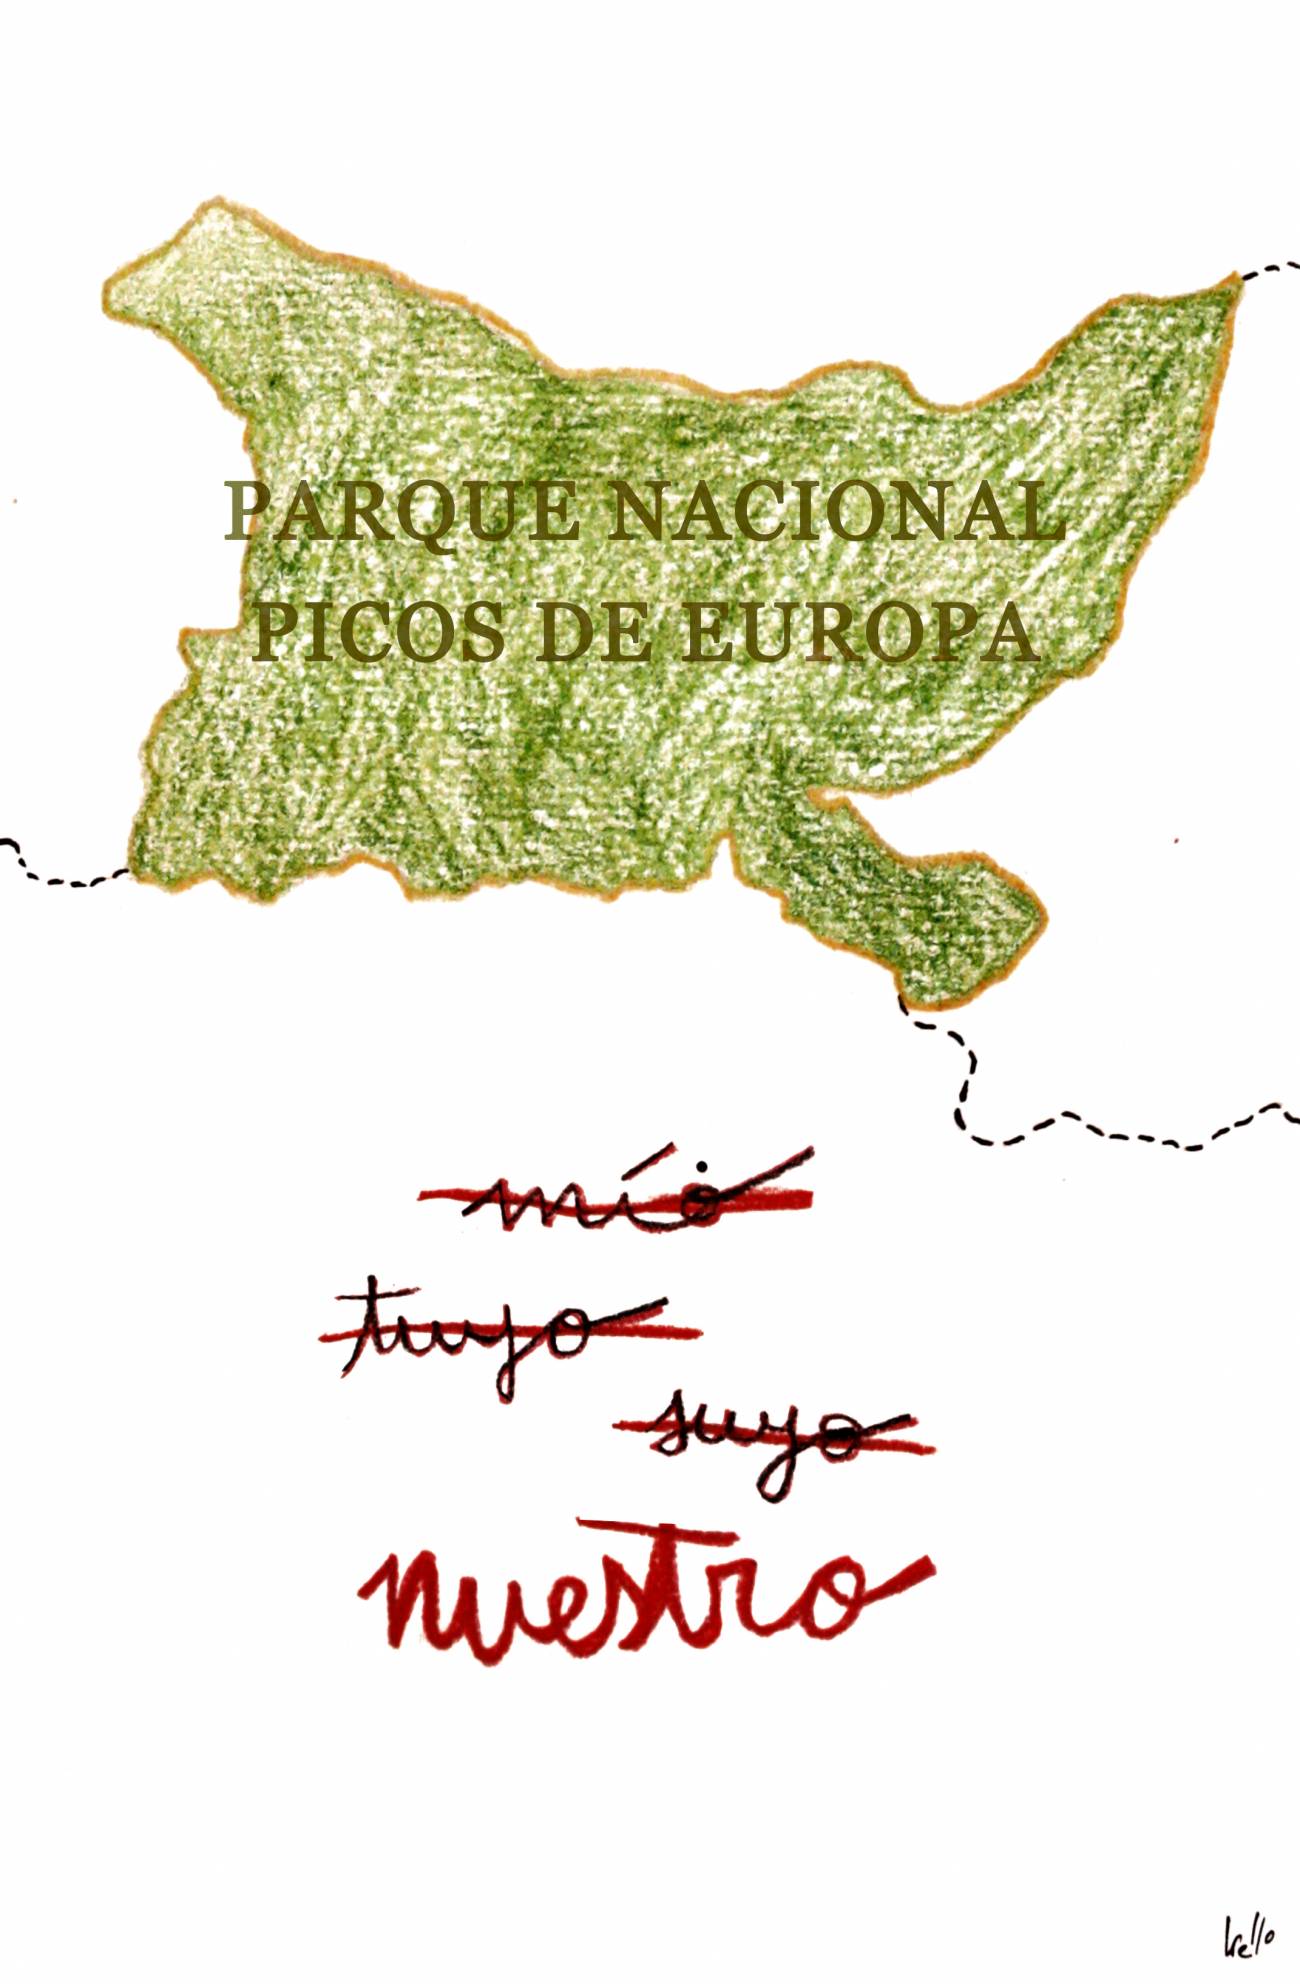 1918: Declaran al macizo de Picos de Europa Parque Nacional de la Montaña de Covadonga (luego P.N. Picos de Europa)